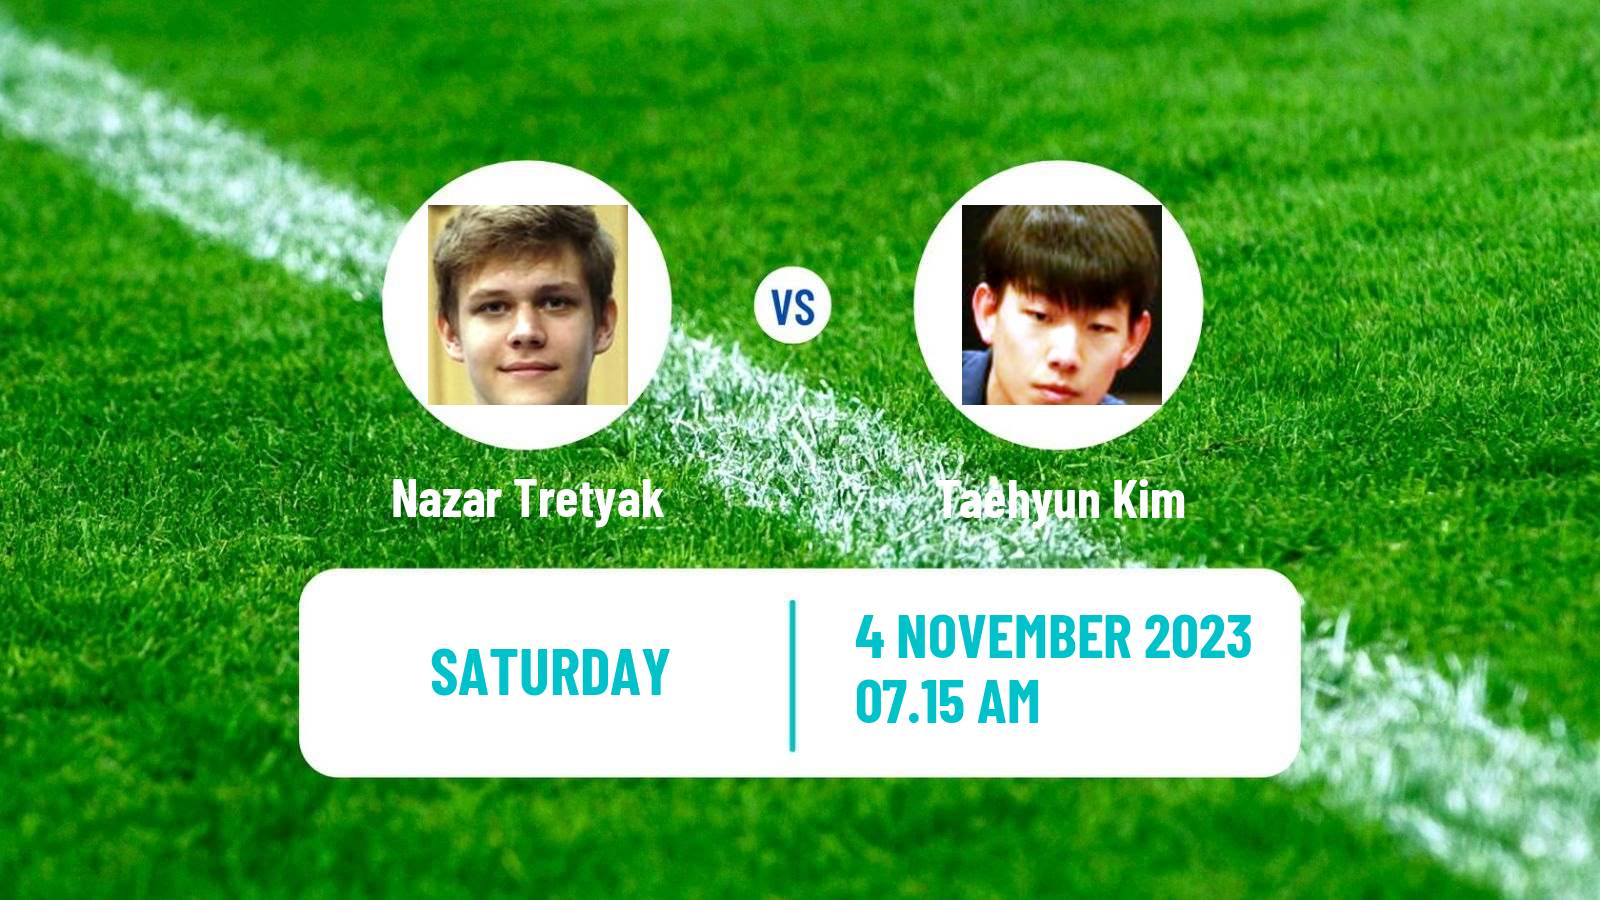 Table tennis Tt Star Series Men Nazar Tretyak - Taehyun Kim